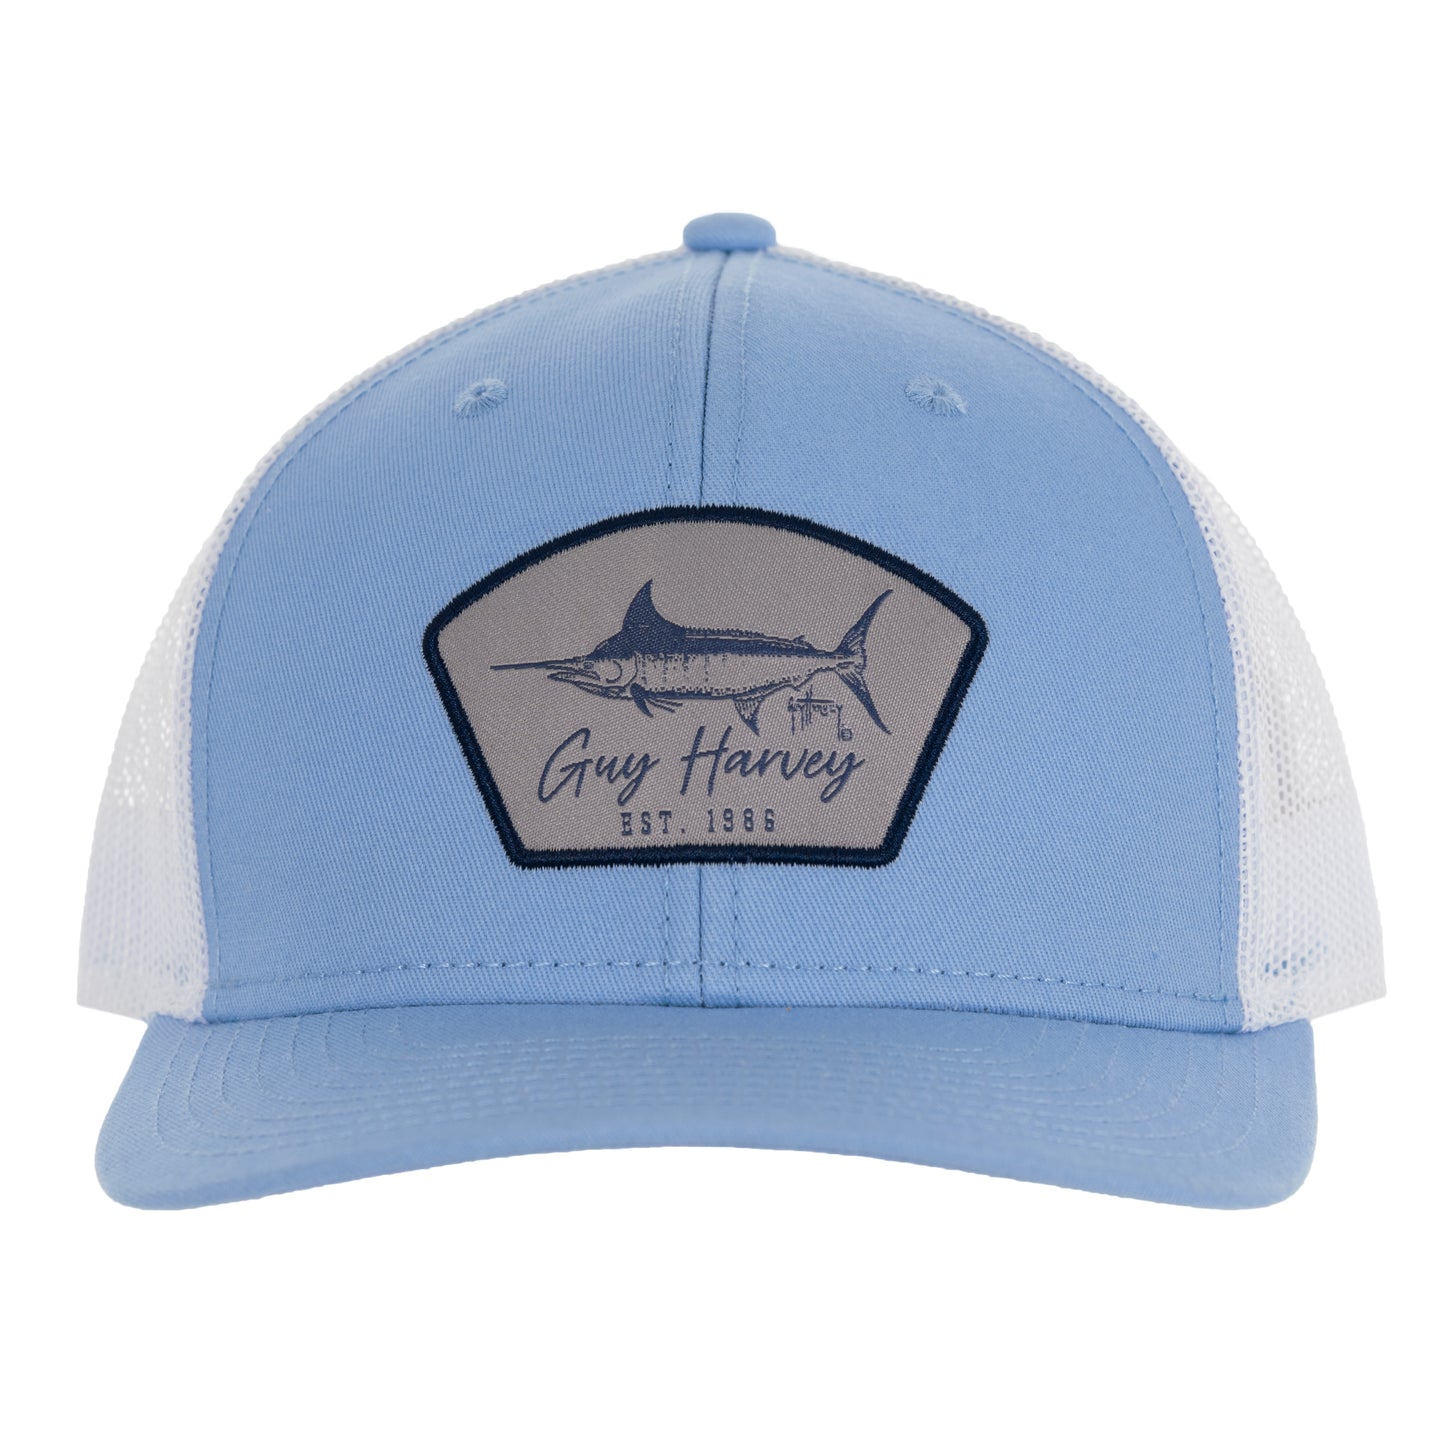 Ladies Light Blue Cali Vibes Mesh Trucker Hat View 3